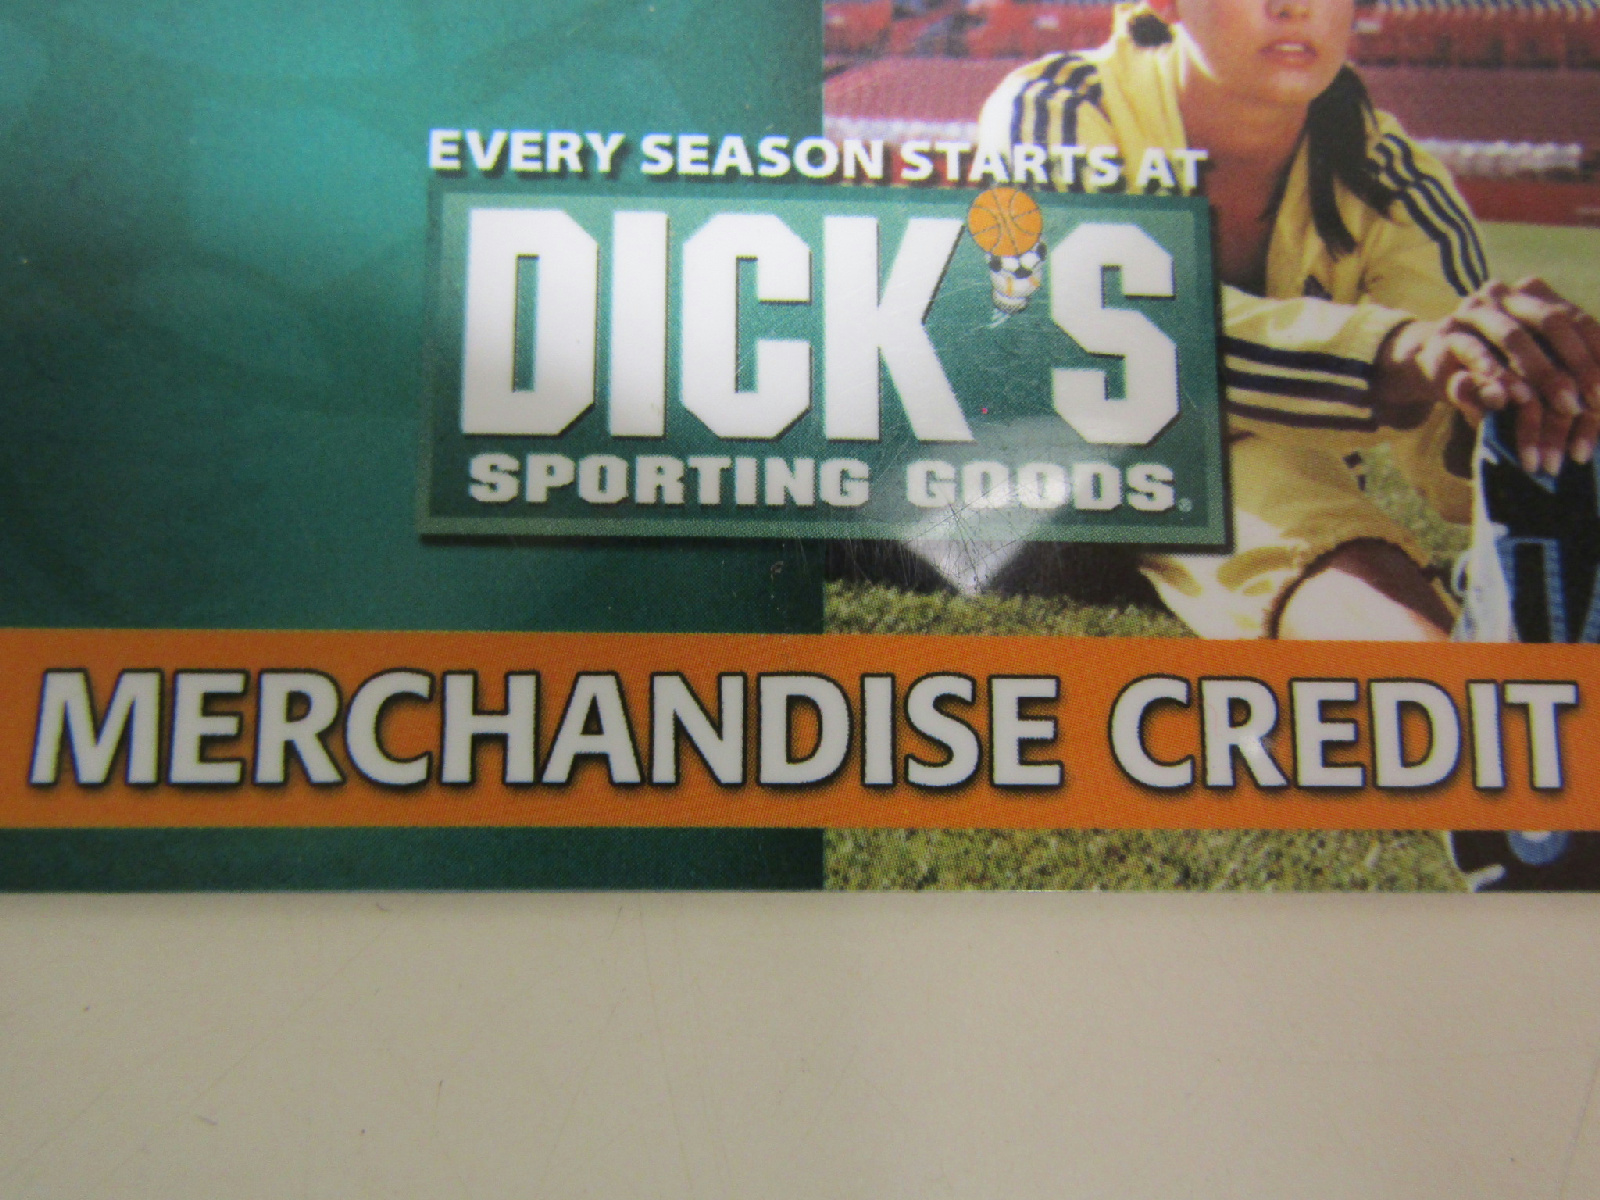 Dicks Sporting Goods Merchandise Credit Gift Card Balance Of 20.99 | eBay